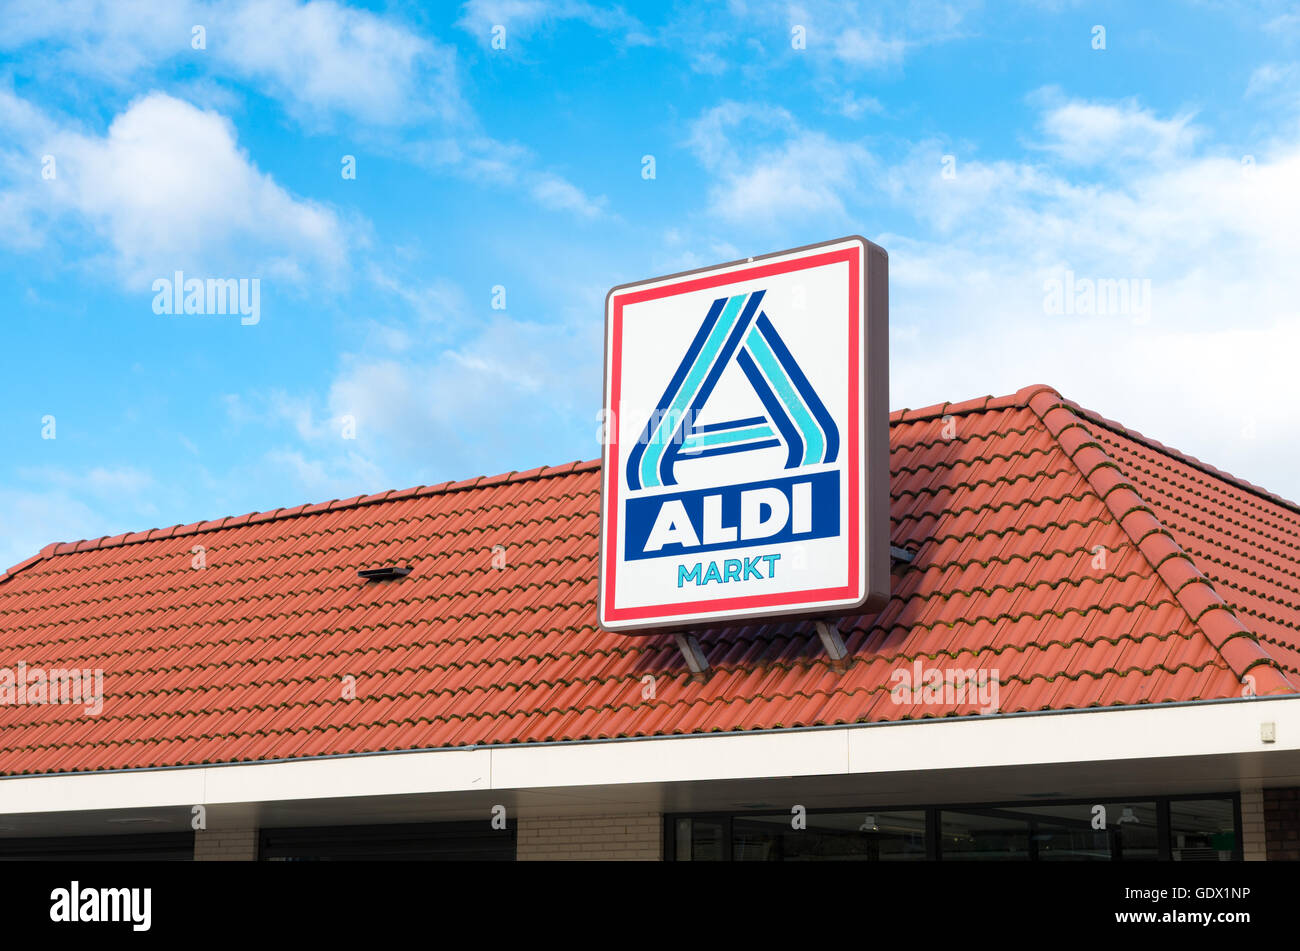 OLDENZAAL, NETHERLANDS - NOVEMBER 3, 2015: Aldi store logo. Aldi is an internationally operating German chain of discount superm Stock Photo